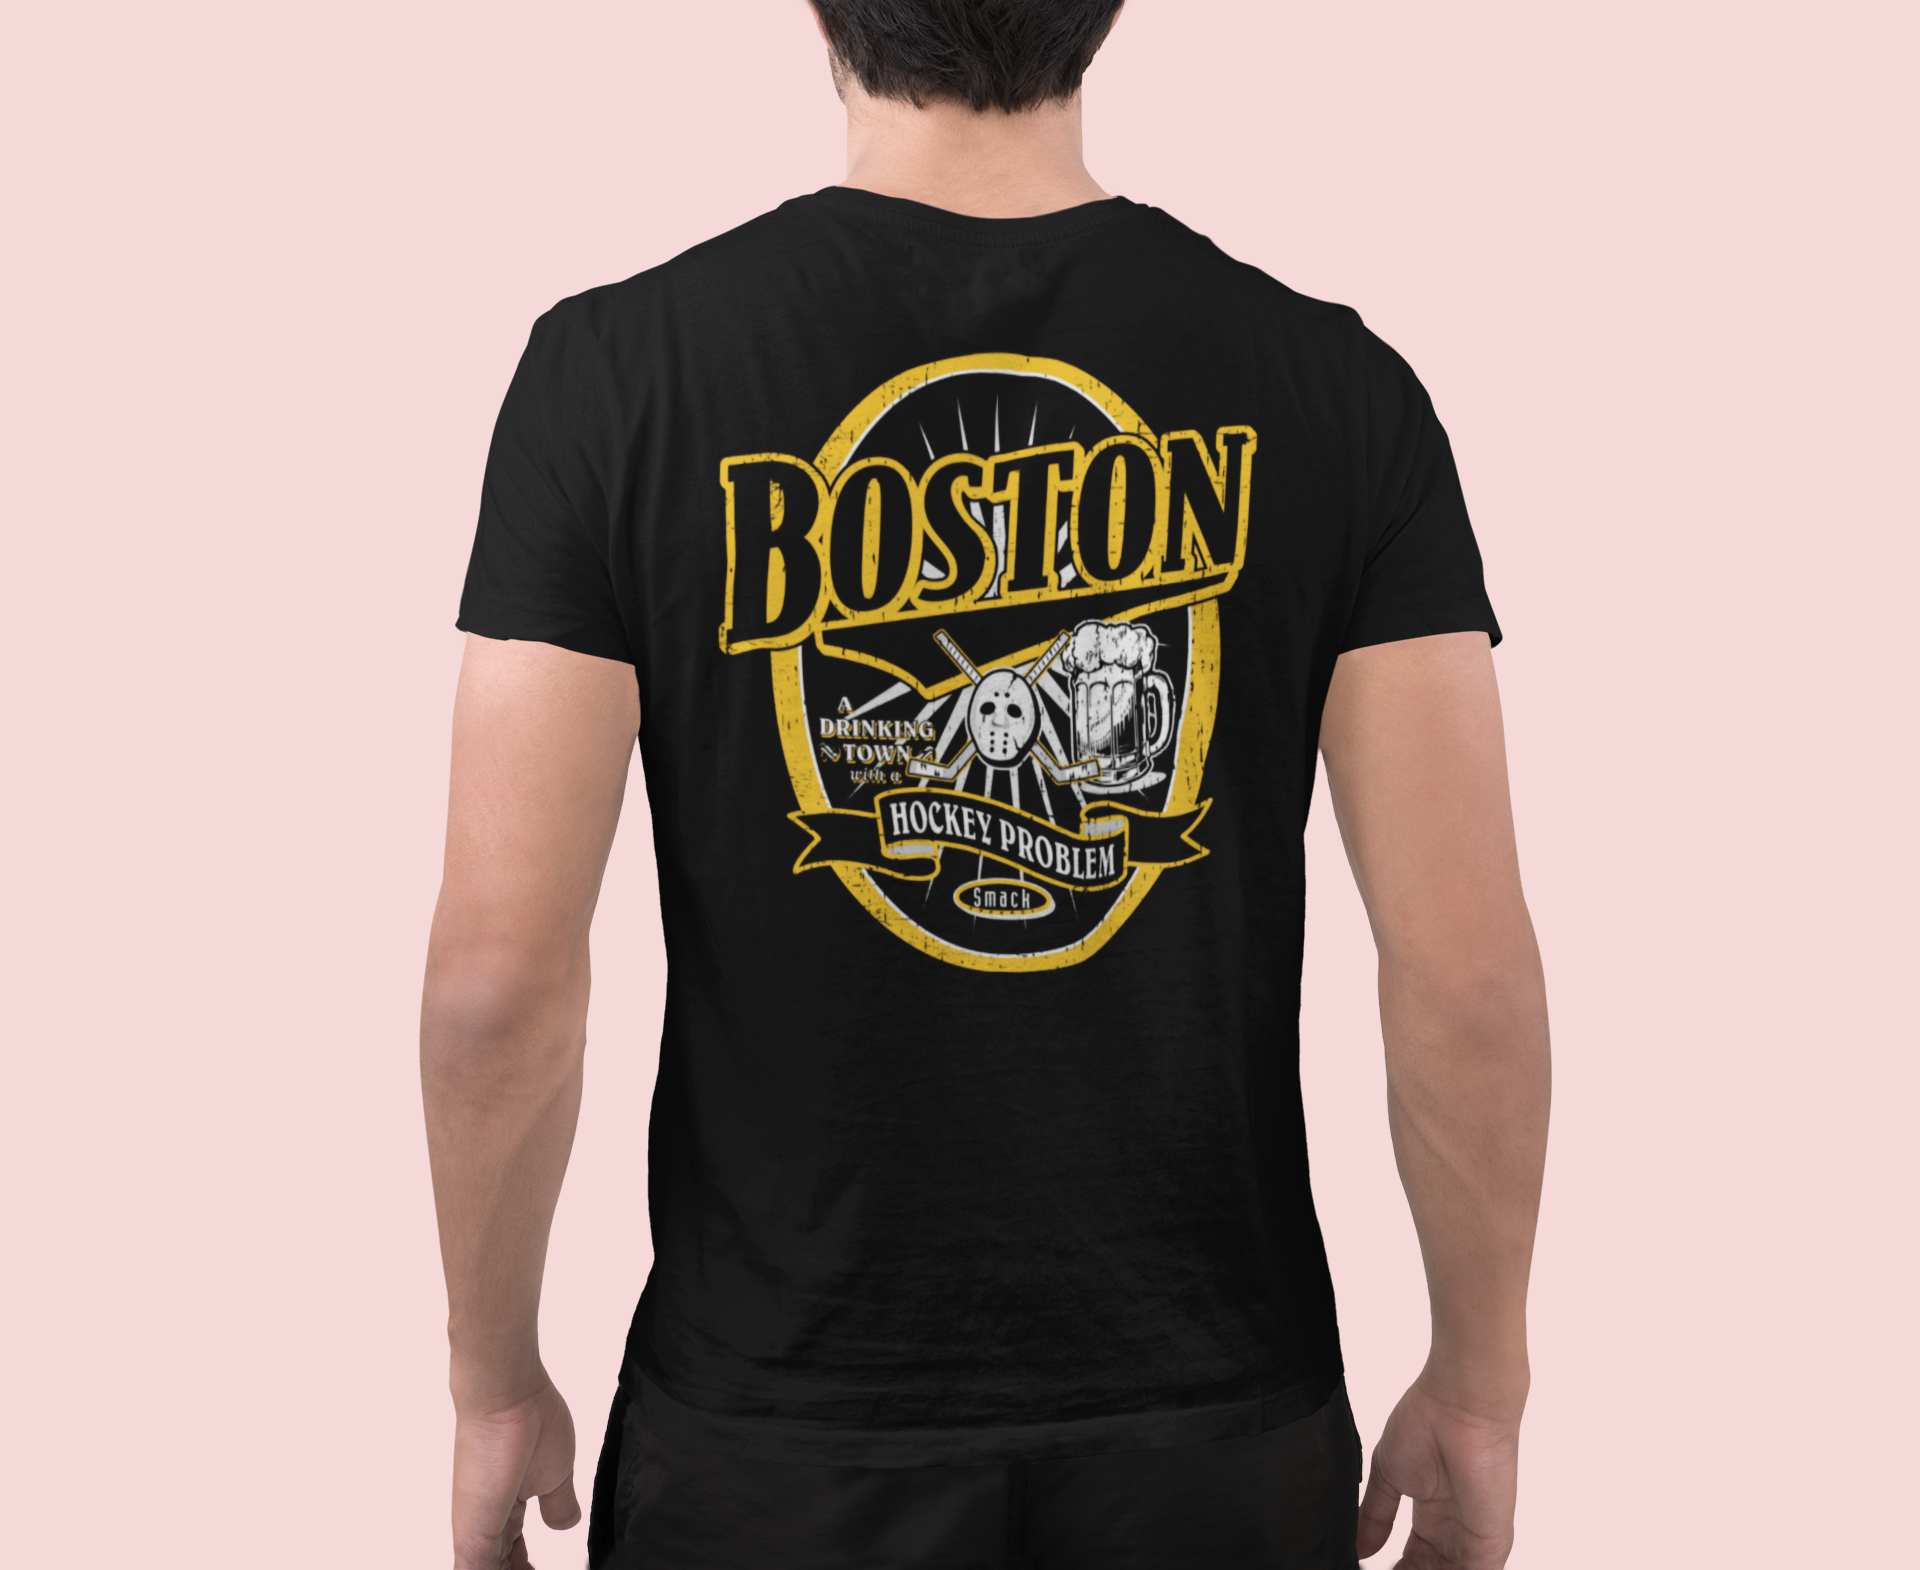 Boston Bruins Deals, Bruins Apparel on Sale, Discounted Boston Bruins Gear,  Clearance Bruins Merchandise